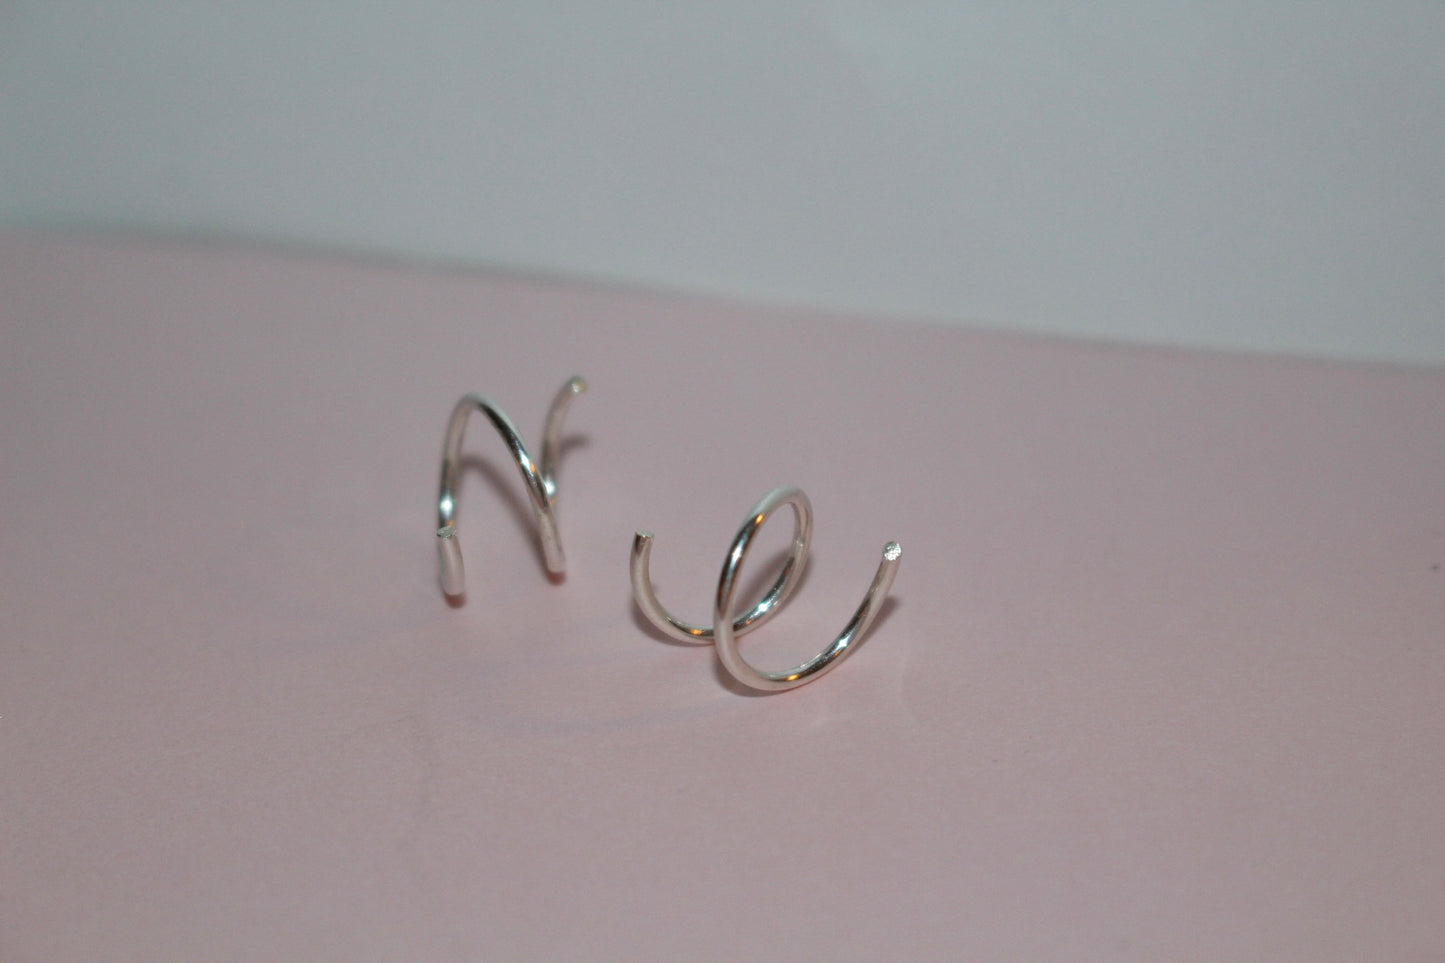 Double Hoop Earrings in Sterling Silver - Can be worn in a single or double piercing!